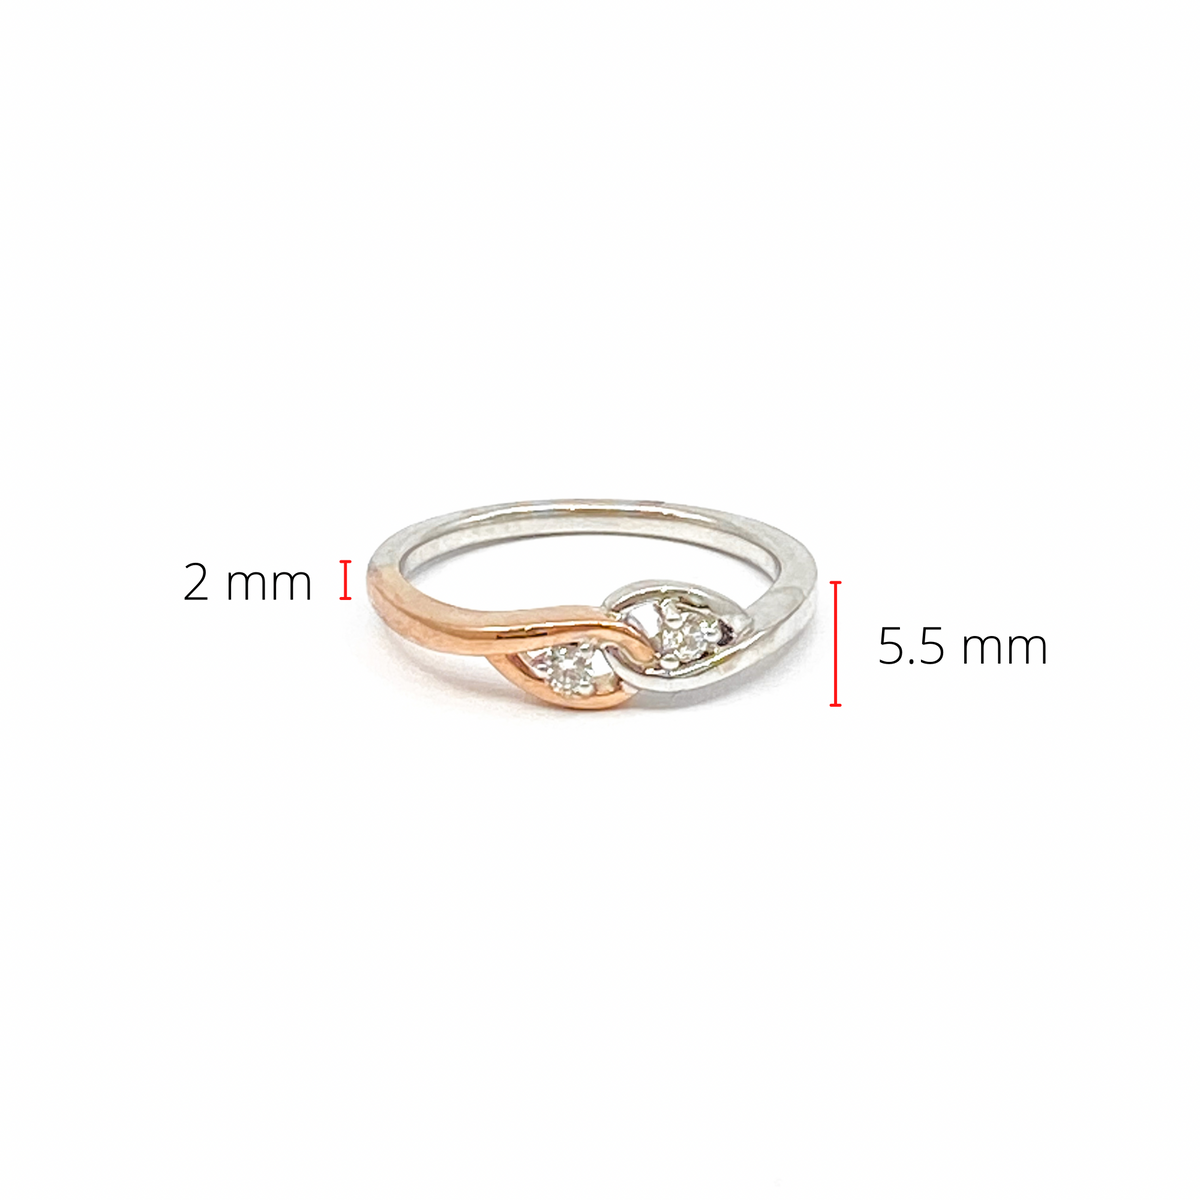 10K White &amp; Rose Gold 0.10cttw Diamond Ring, size 6.5